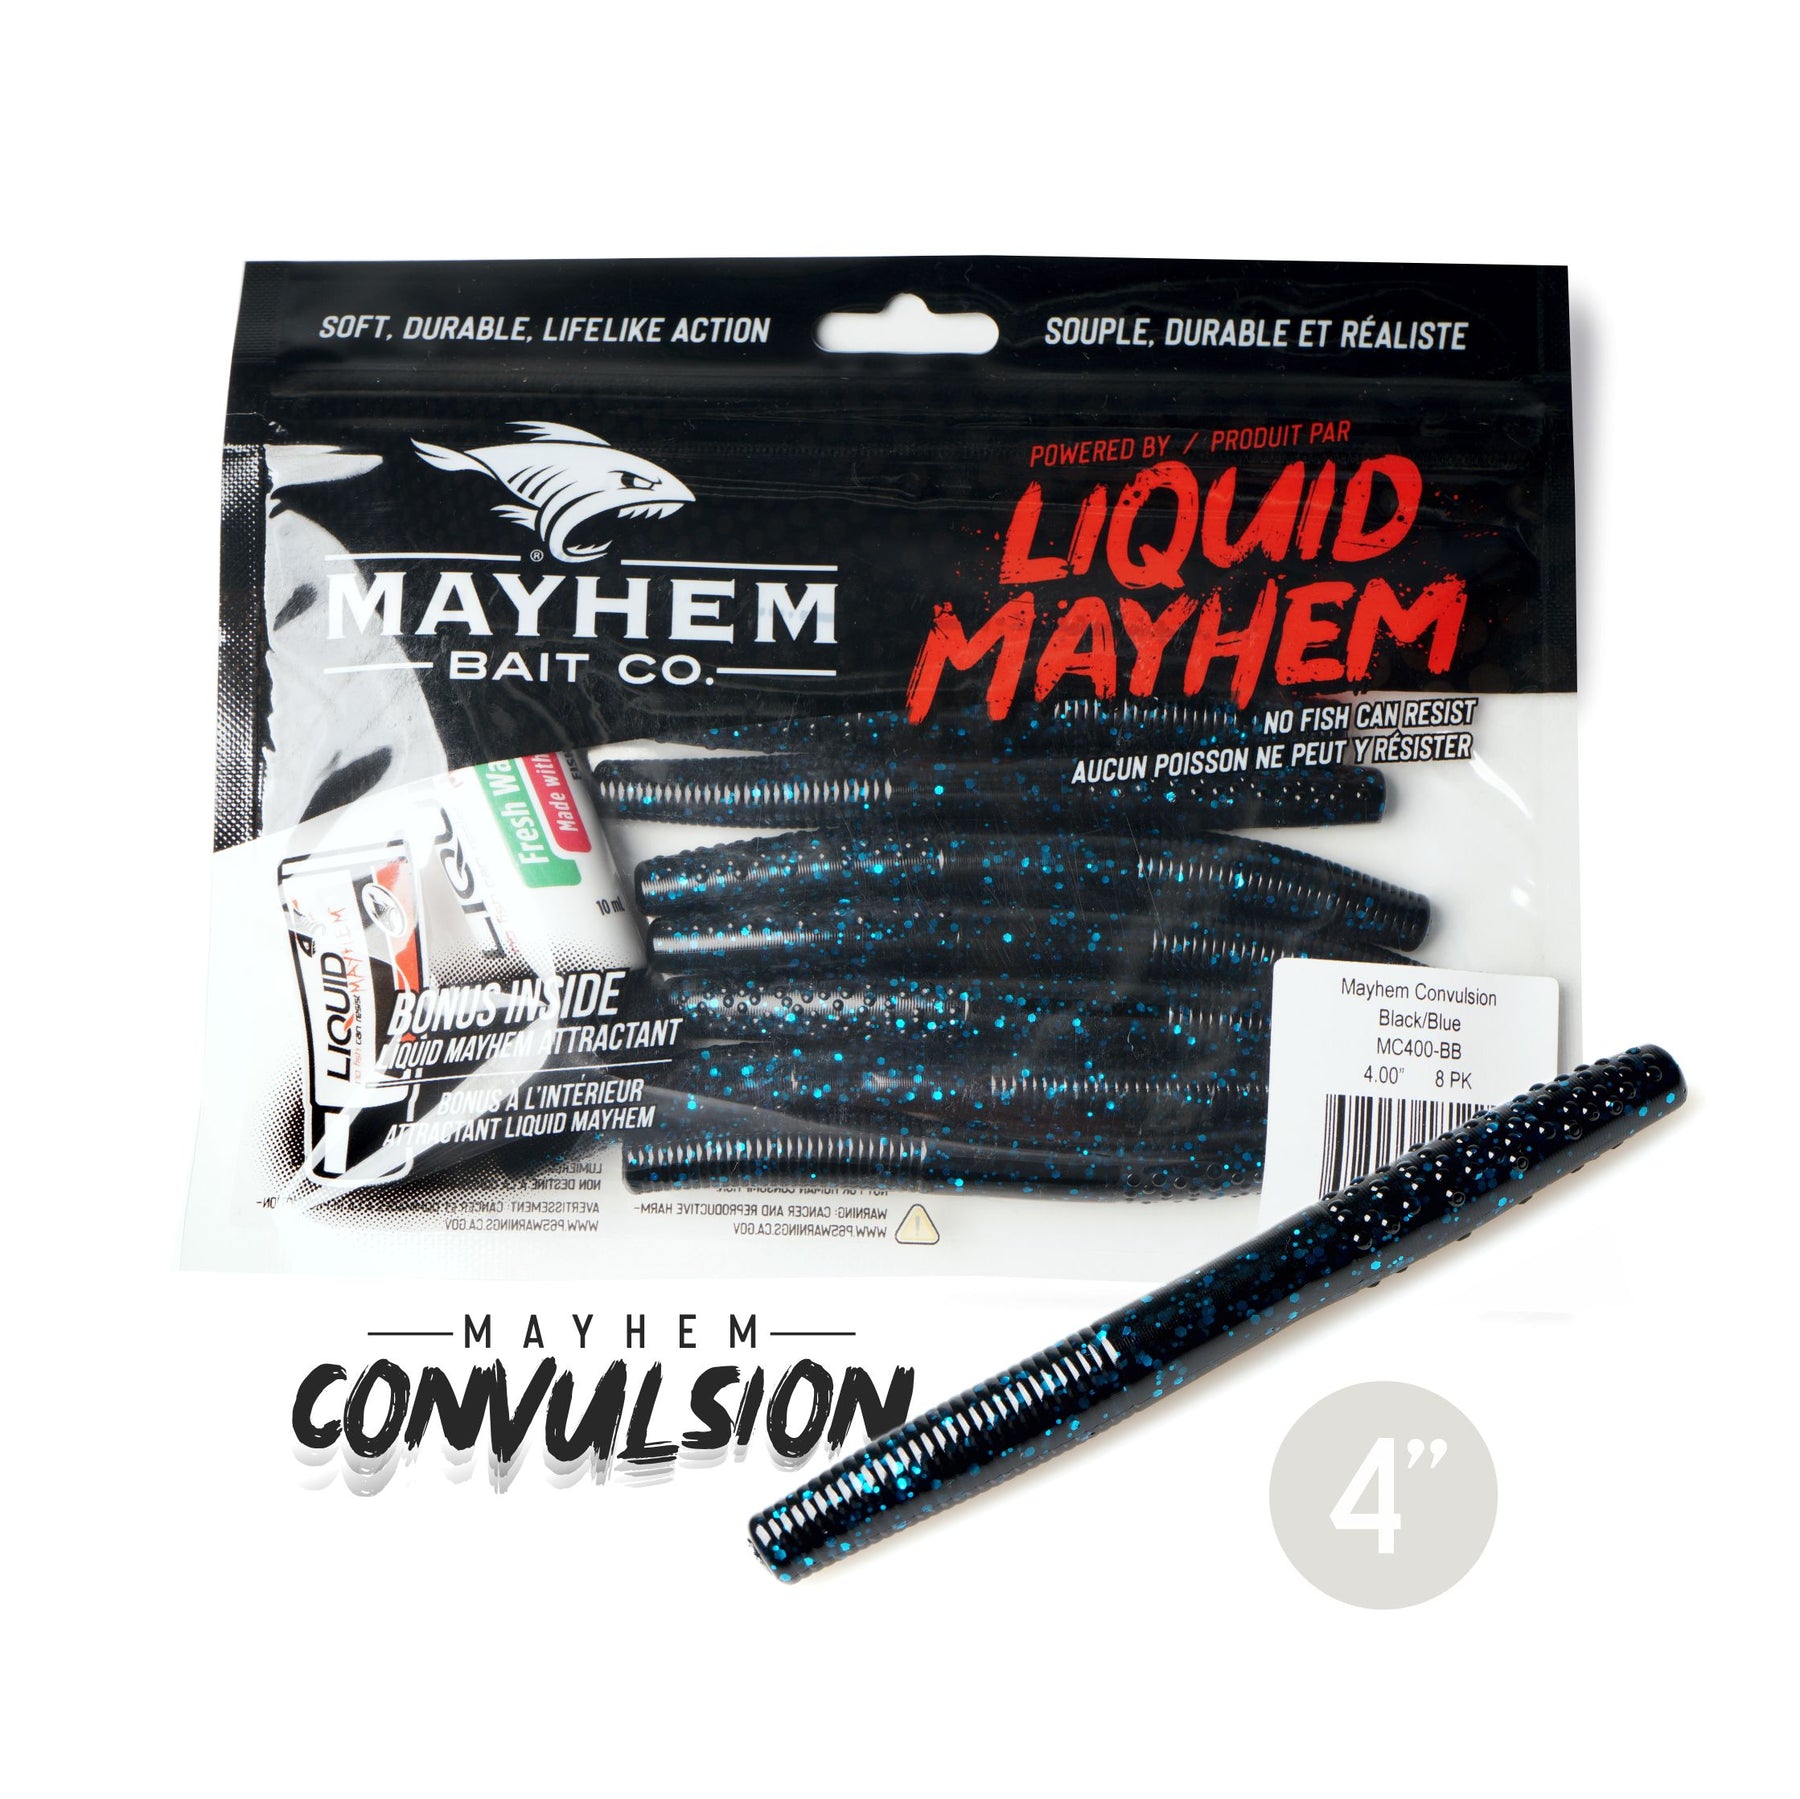 Mayhem Convulsion – LIQUID MAYHEM